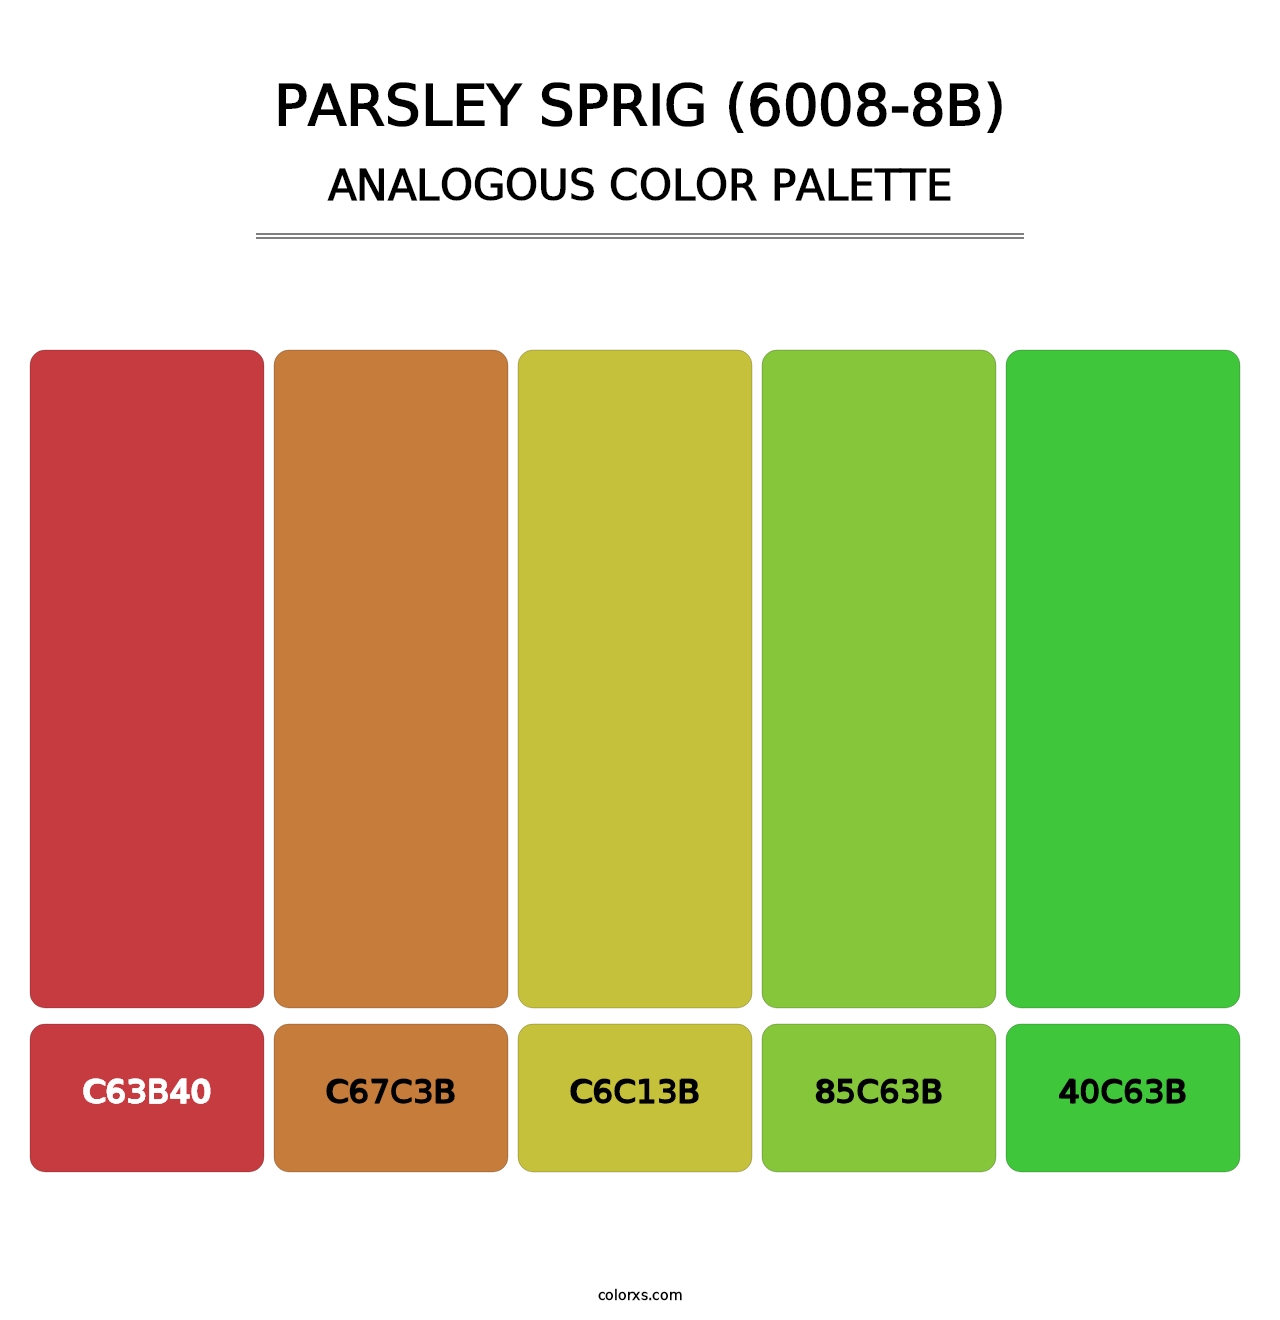 Parsley Sprig (6008-8B) - Analogous Color Palette